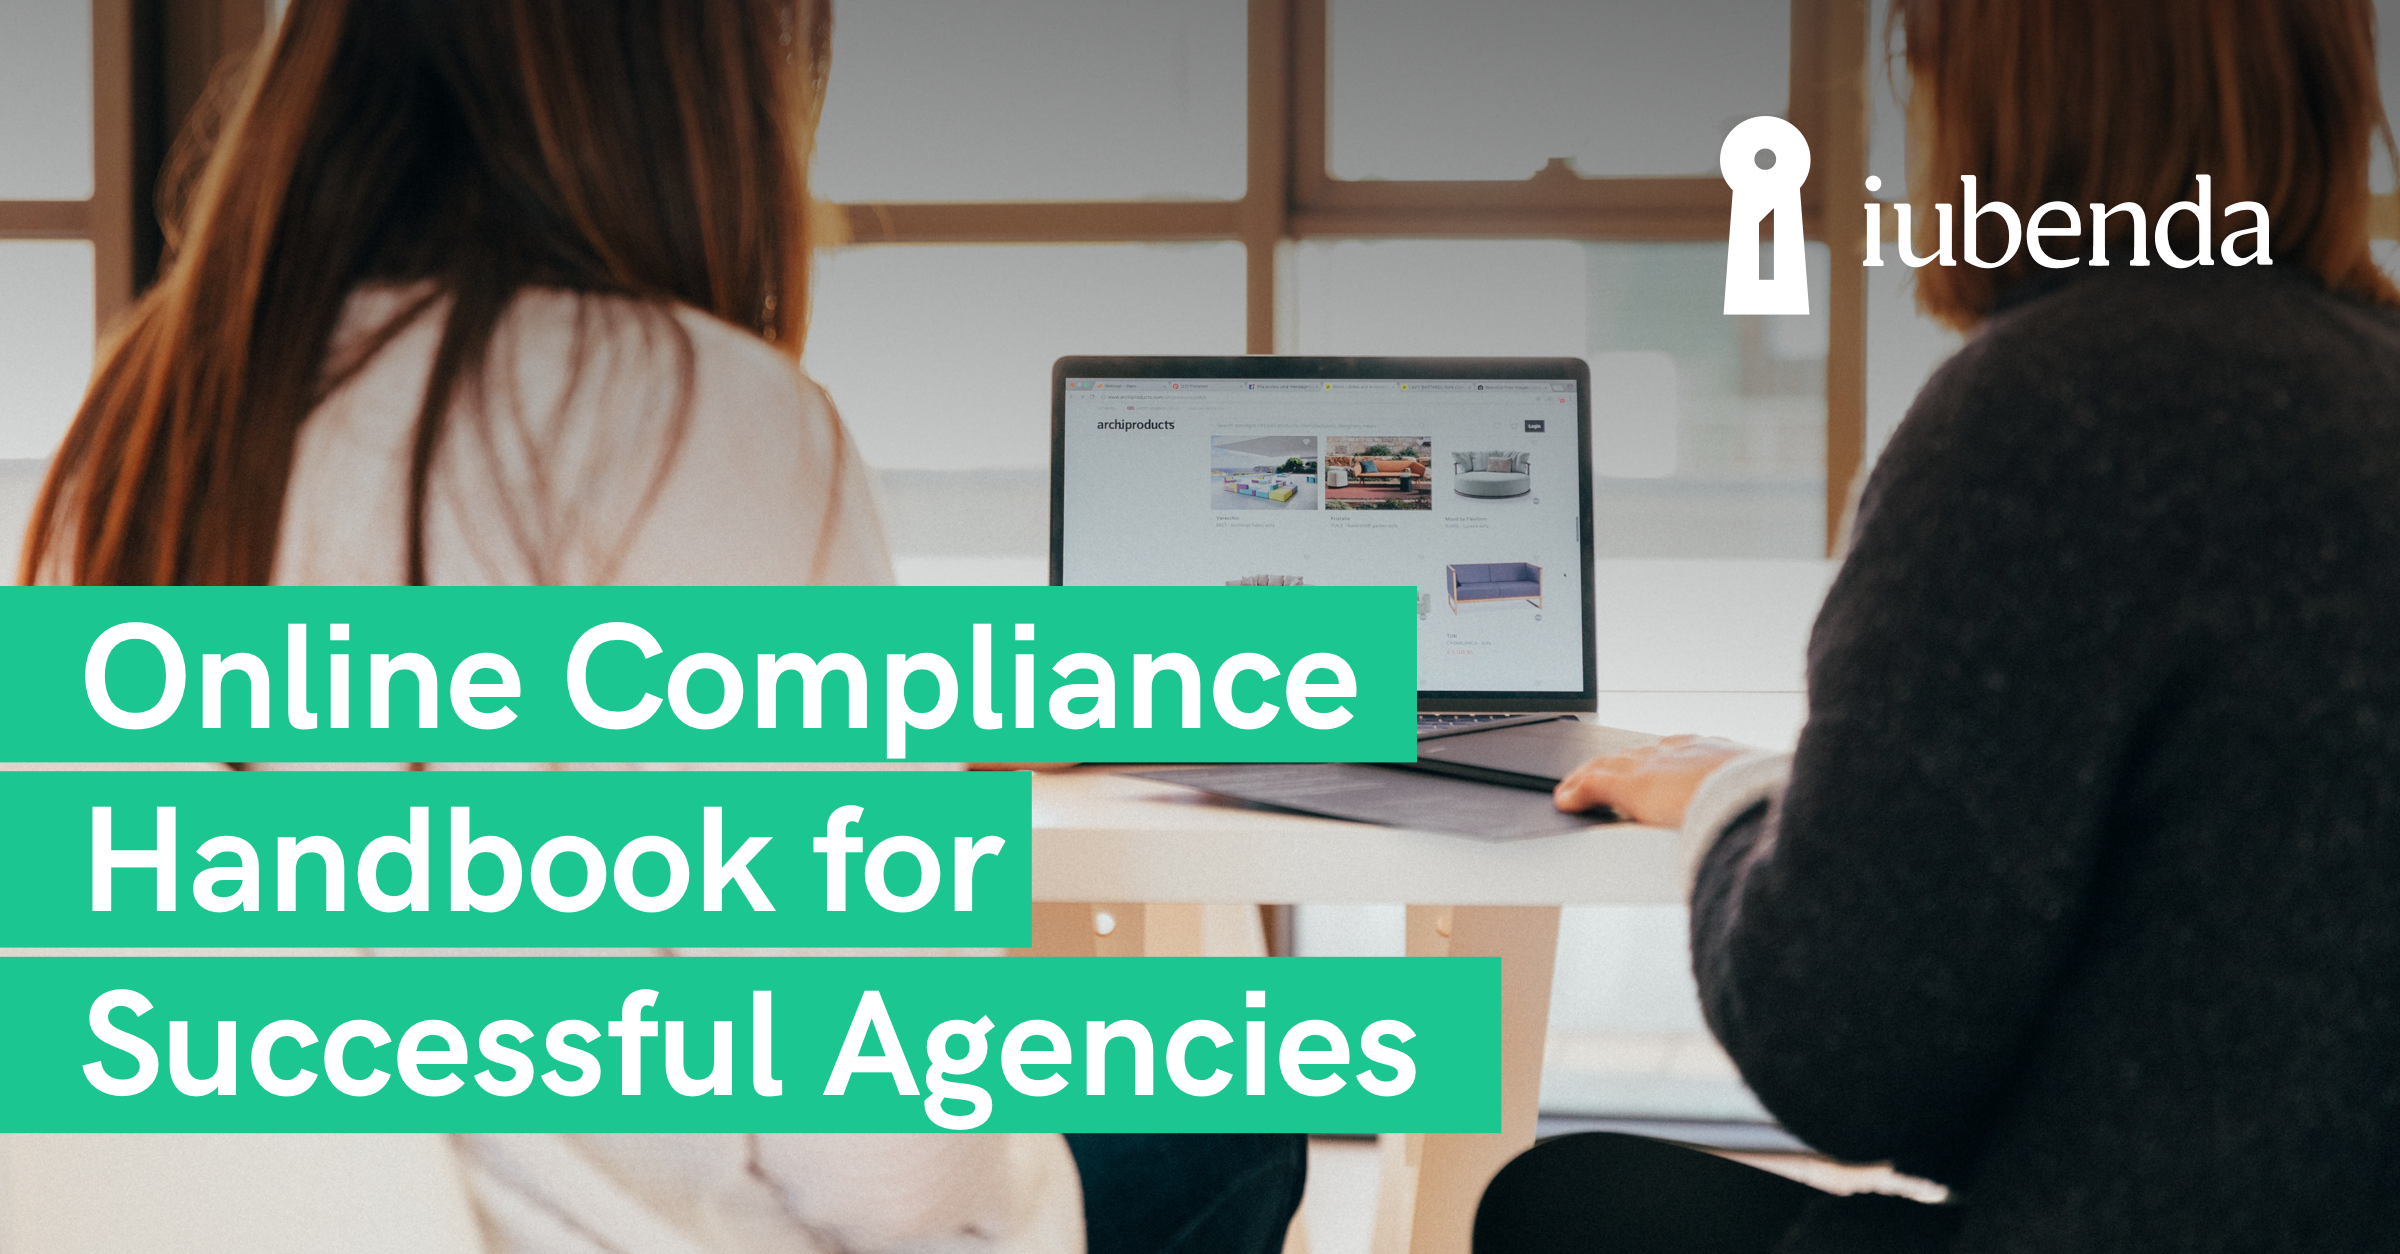 Online Compliance Handbook for Successful Agencies